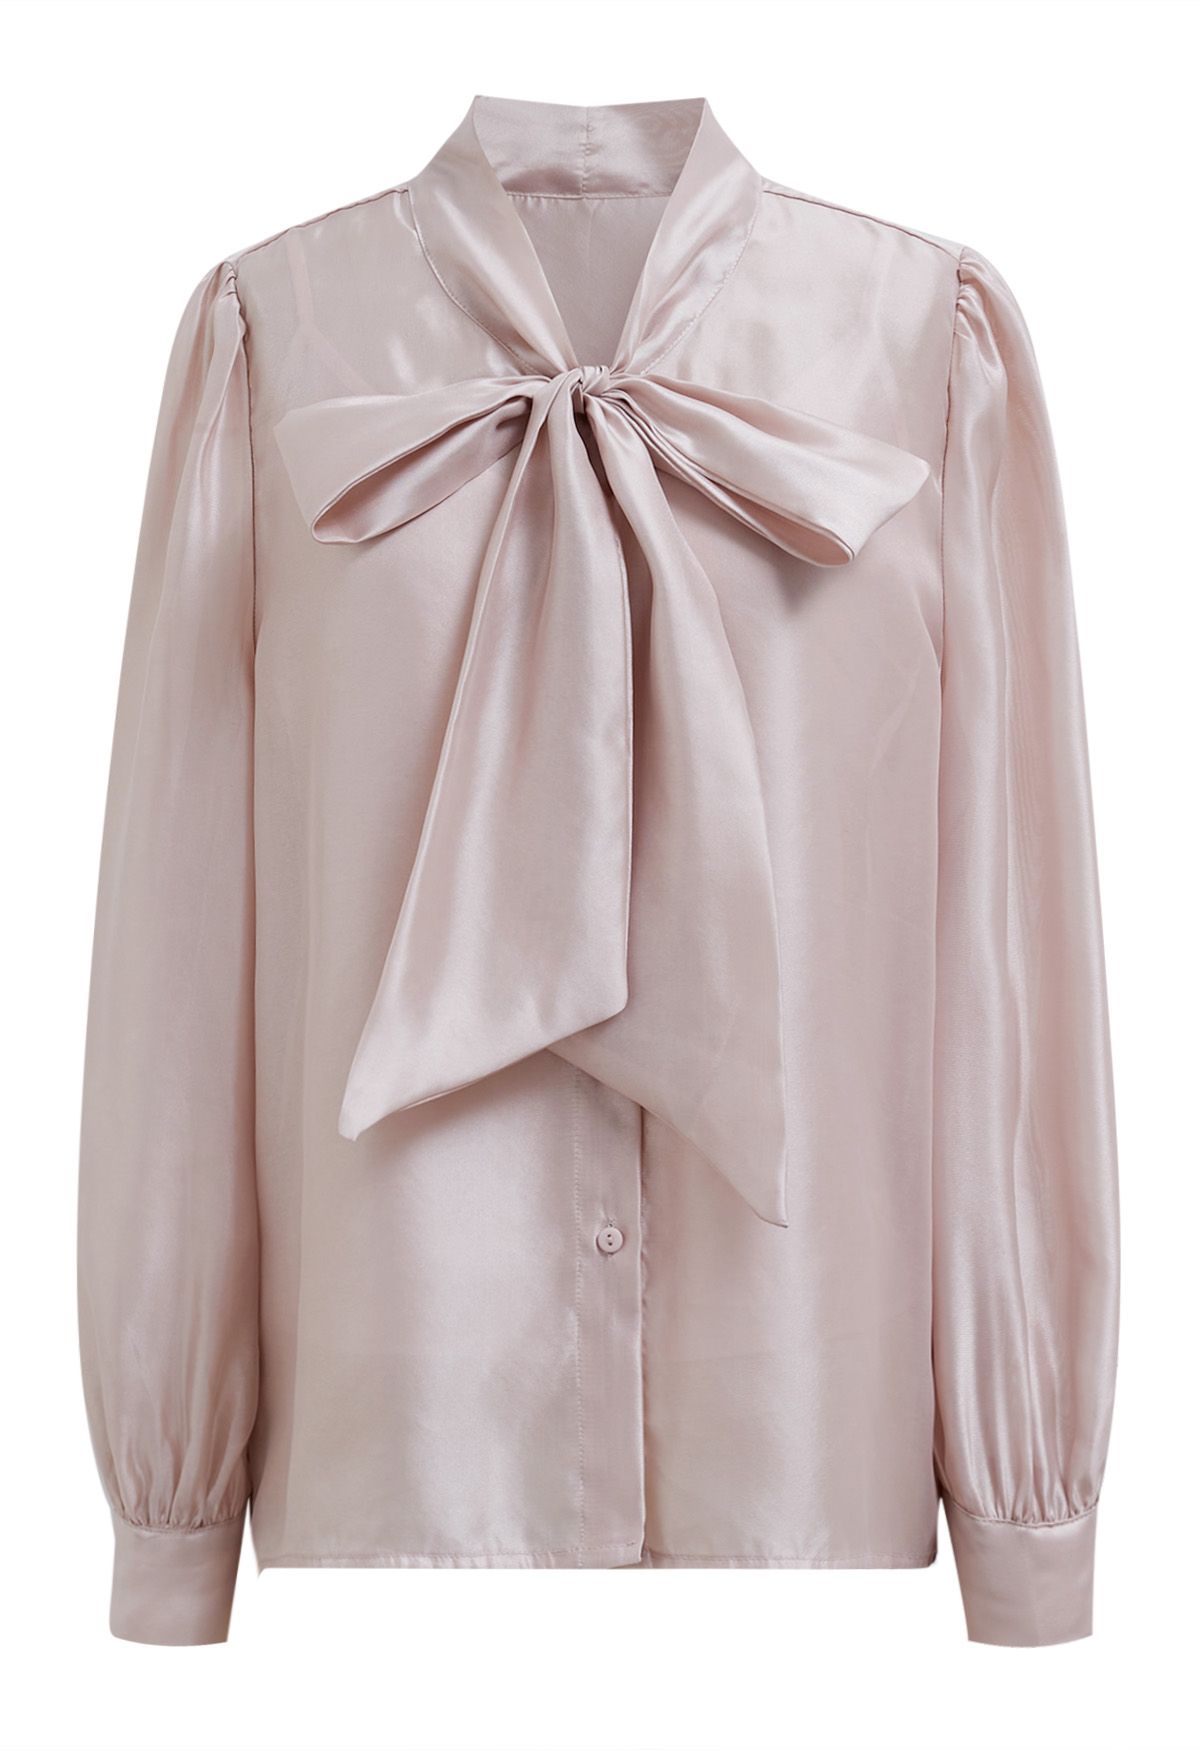 Elegant Bowknot Puff Sleeves Sheer Shirt in Blush